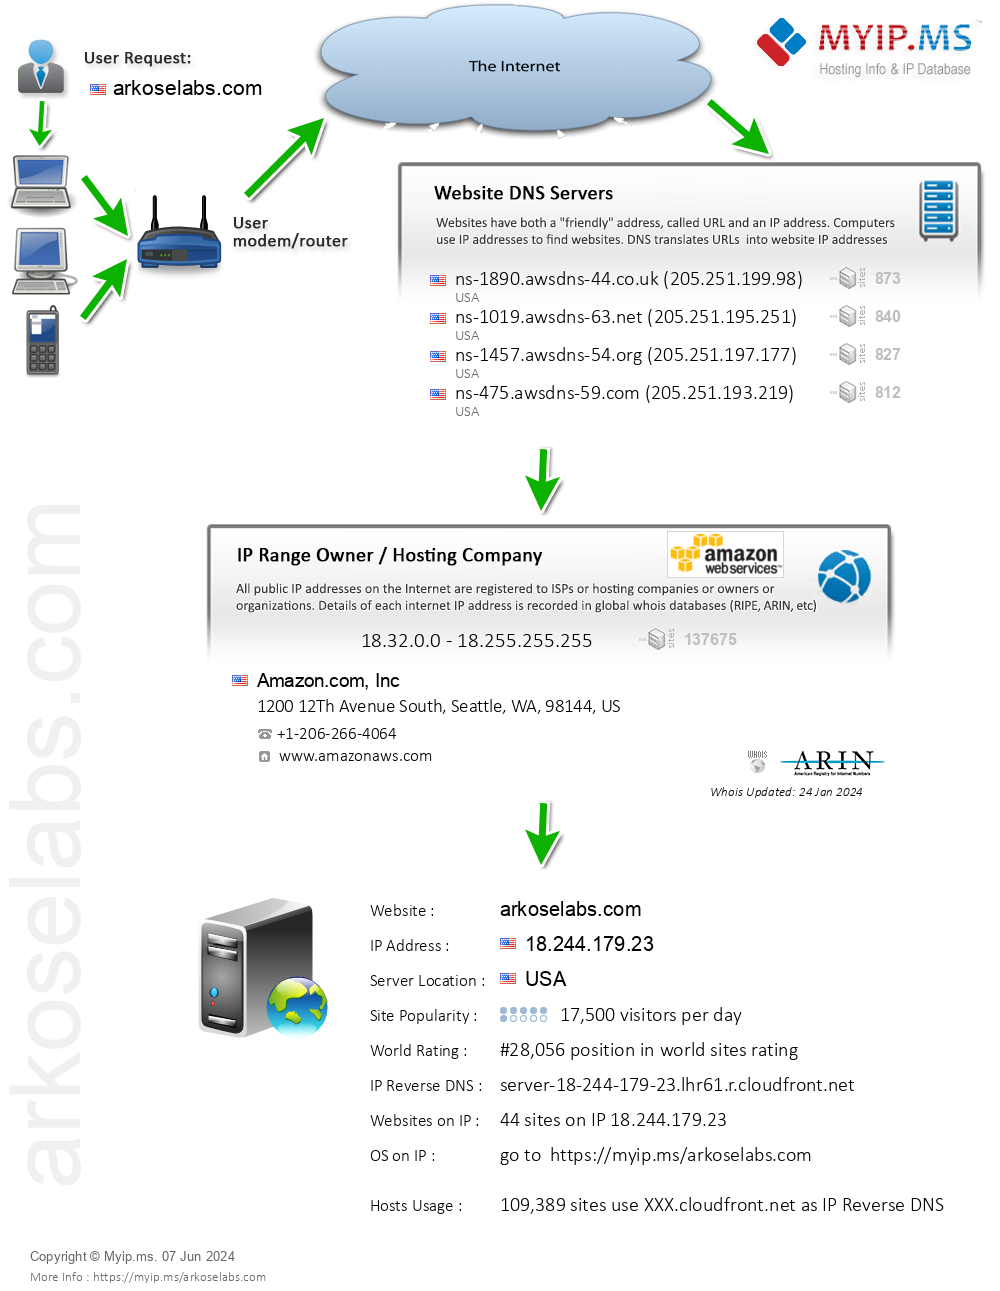 Arkoselabs.com - Website Hosting Visual IP Diagram